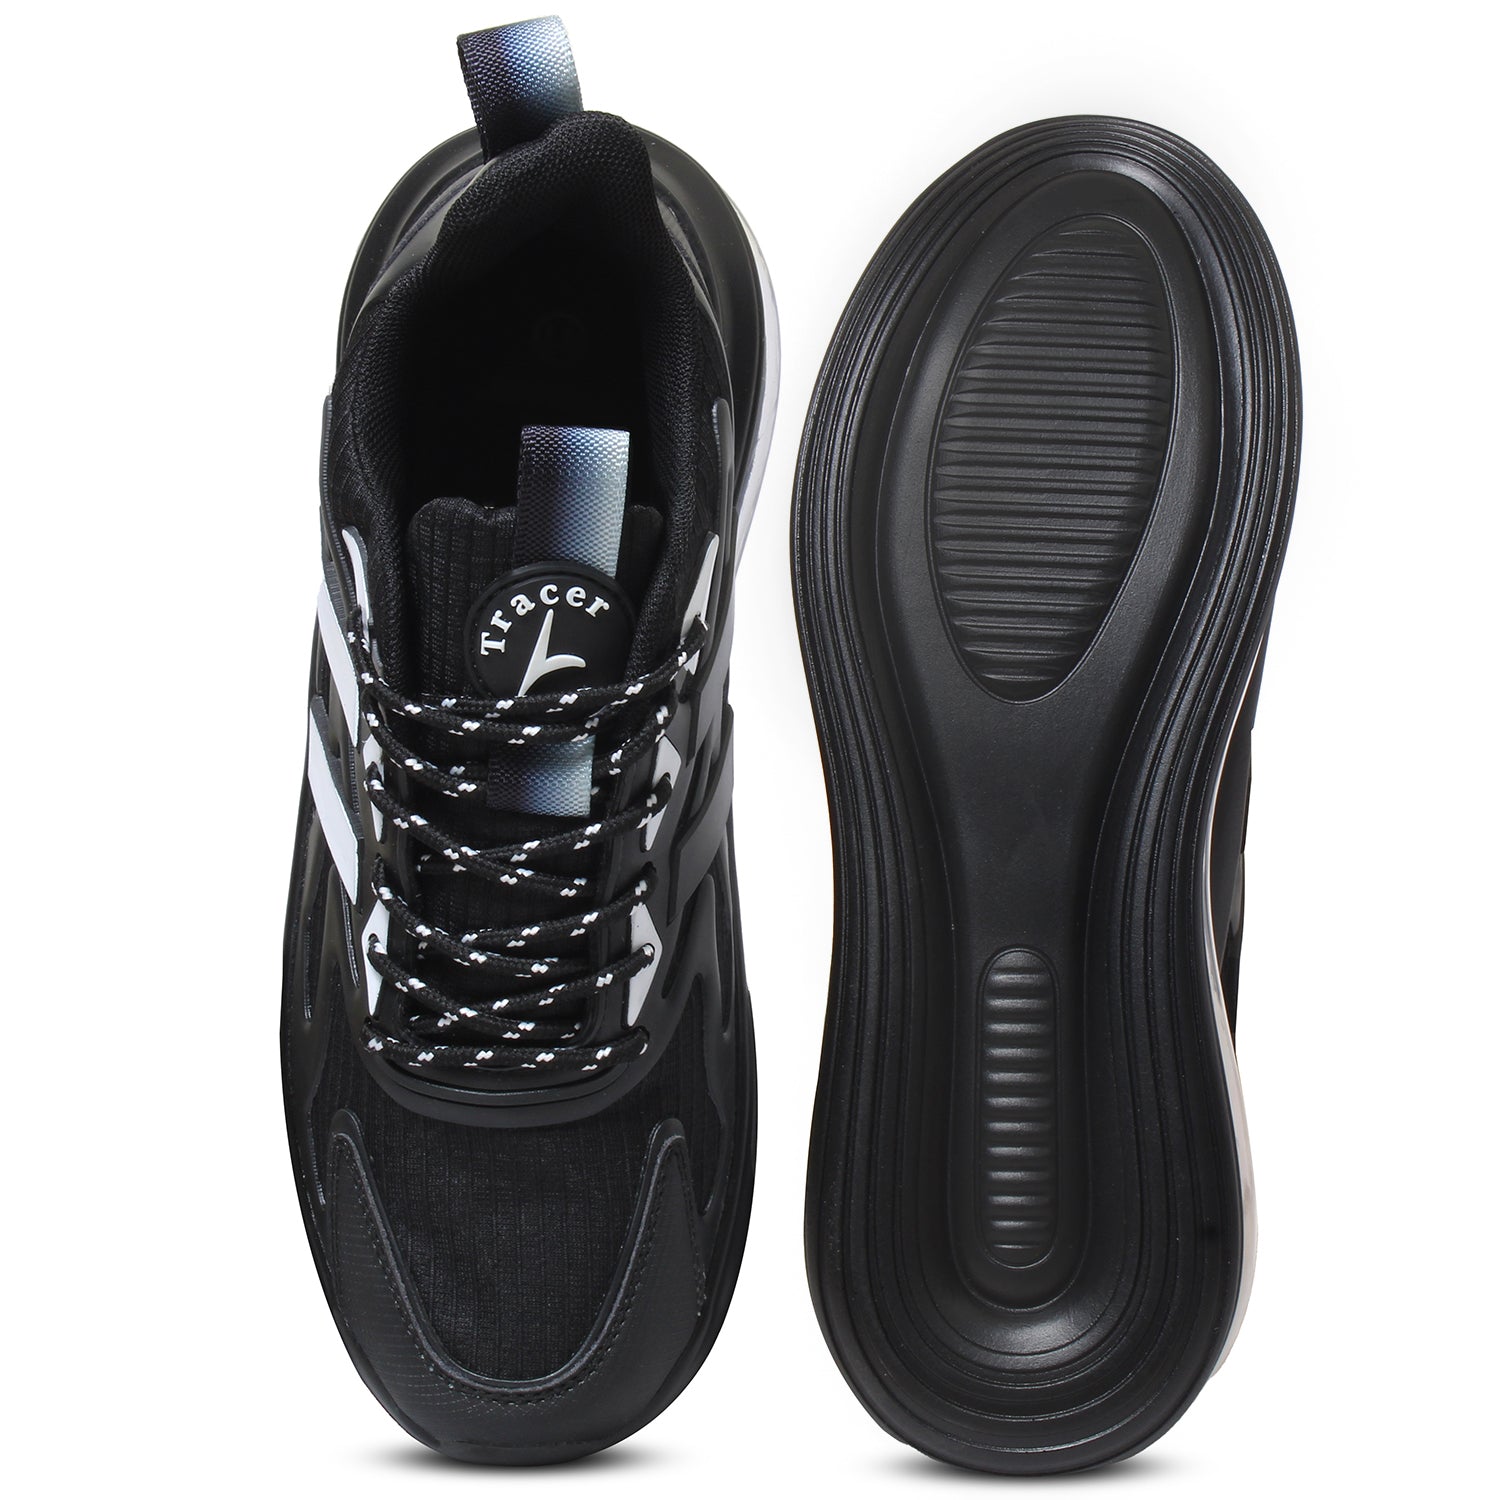 Tracer Shoes | Black | Men's Collection